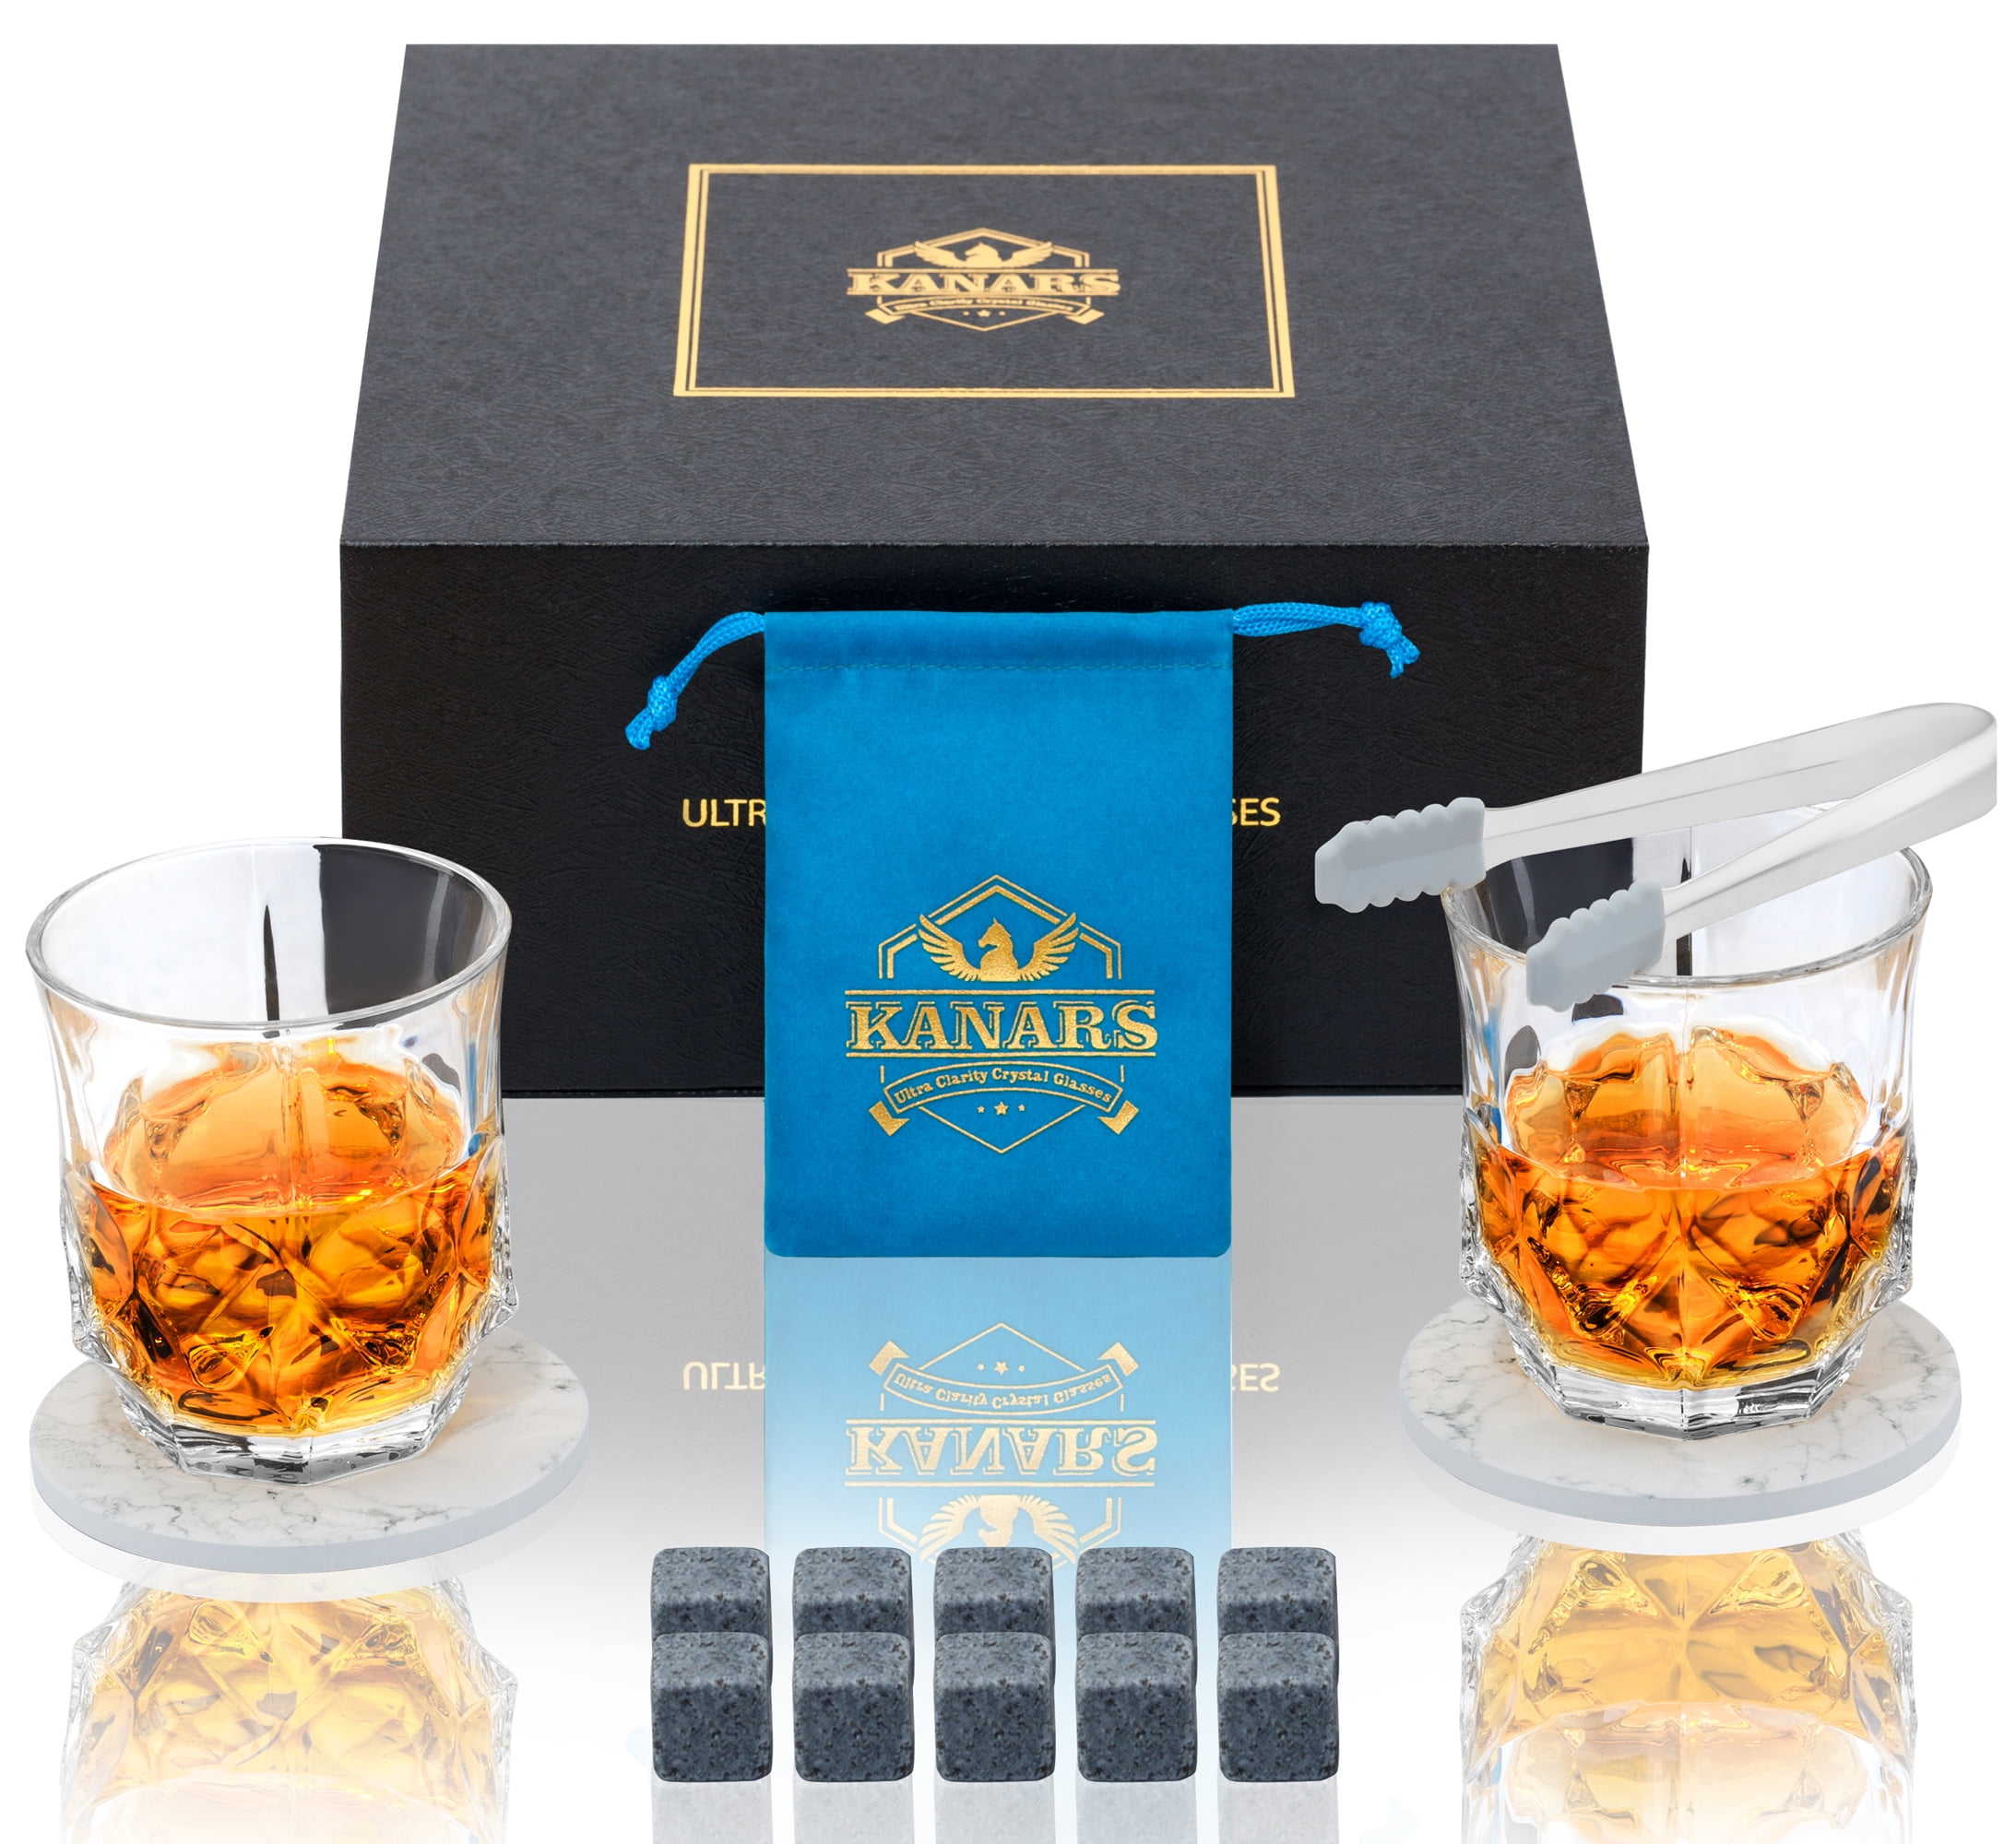 KANARS Premium Whiskey Glasses Gift Set Of 4 Ultra Clarity Crystal Glasses Boxed 